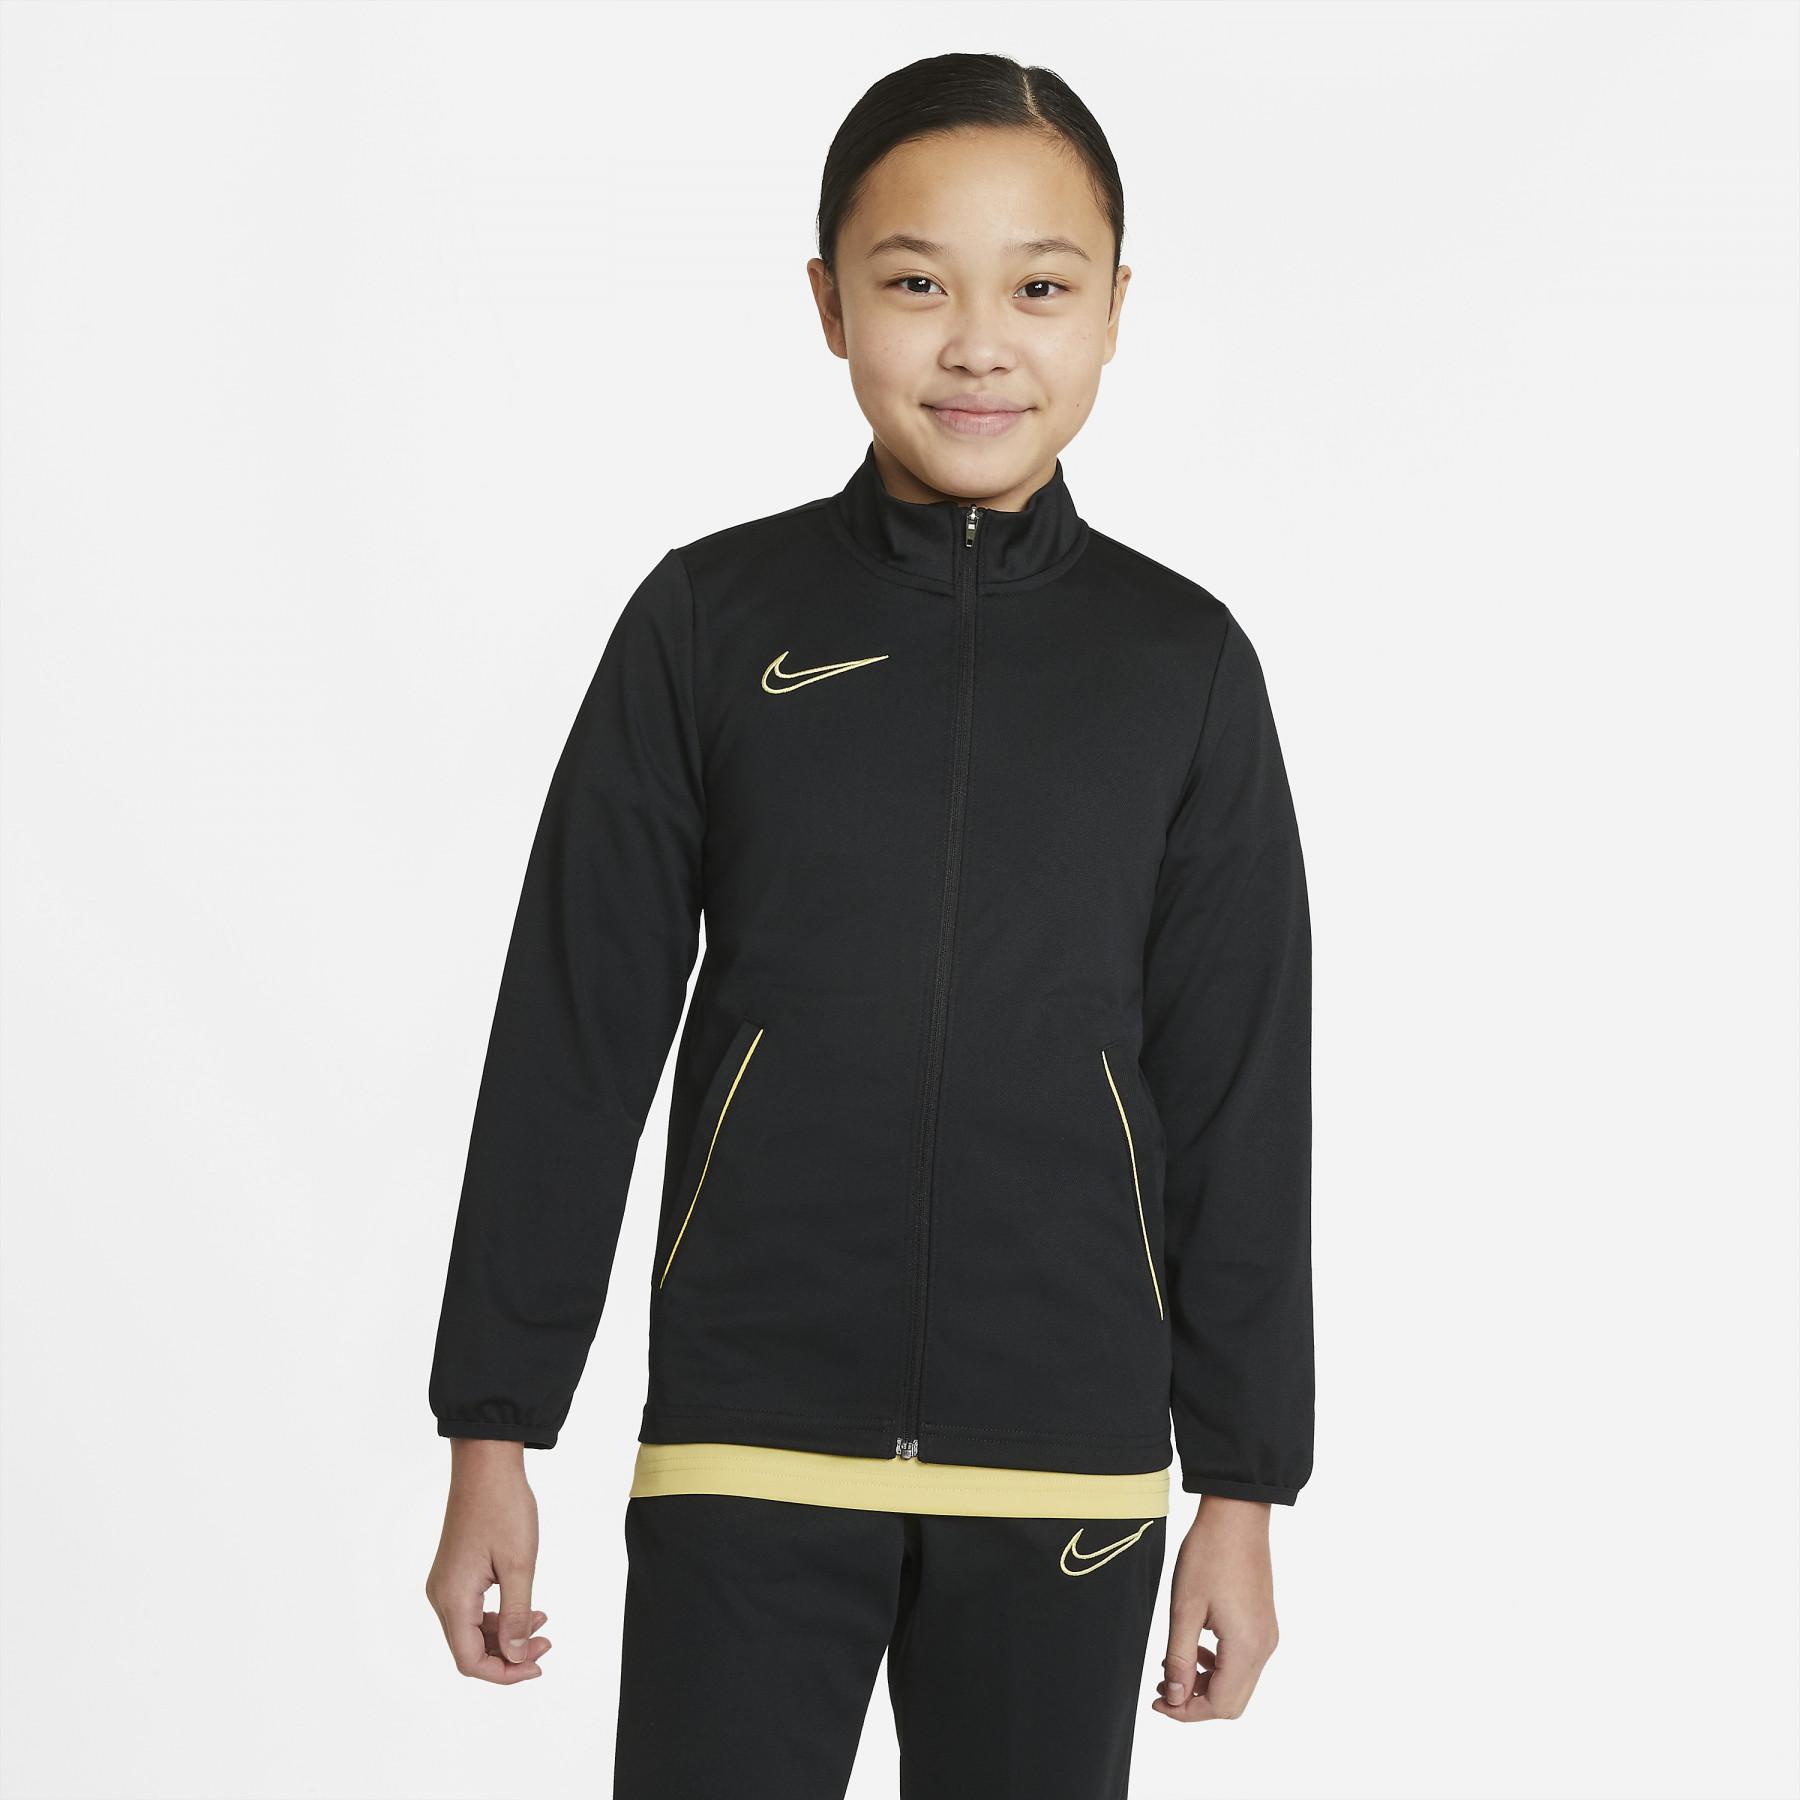 Kinder-Trainingsanzug Nike Dynamic Fit ACD21